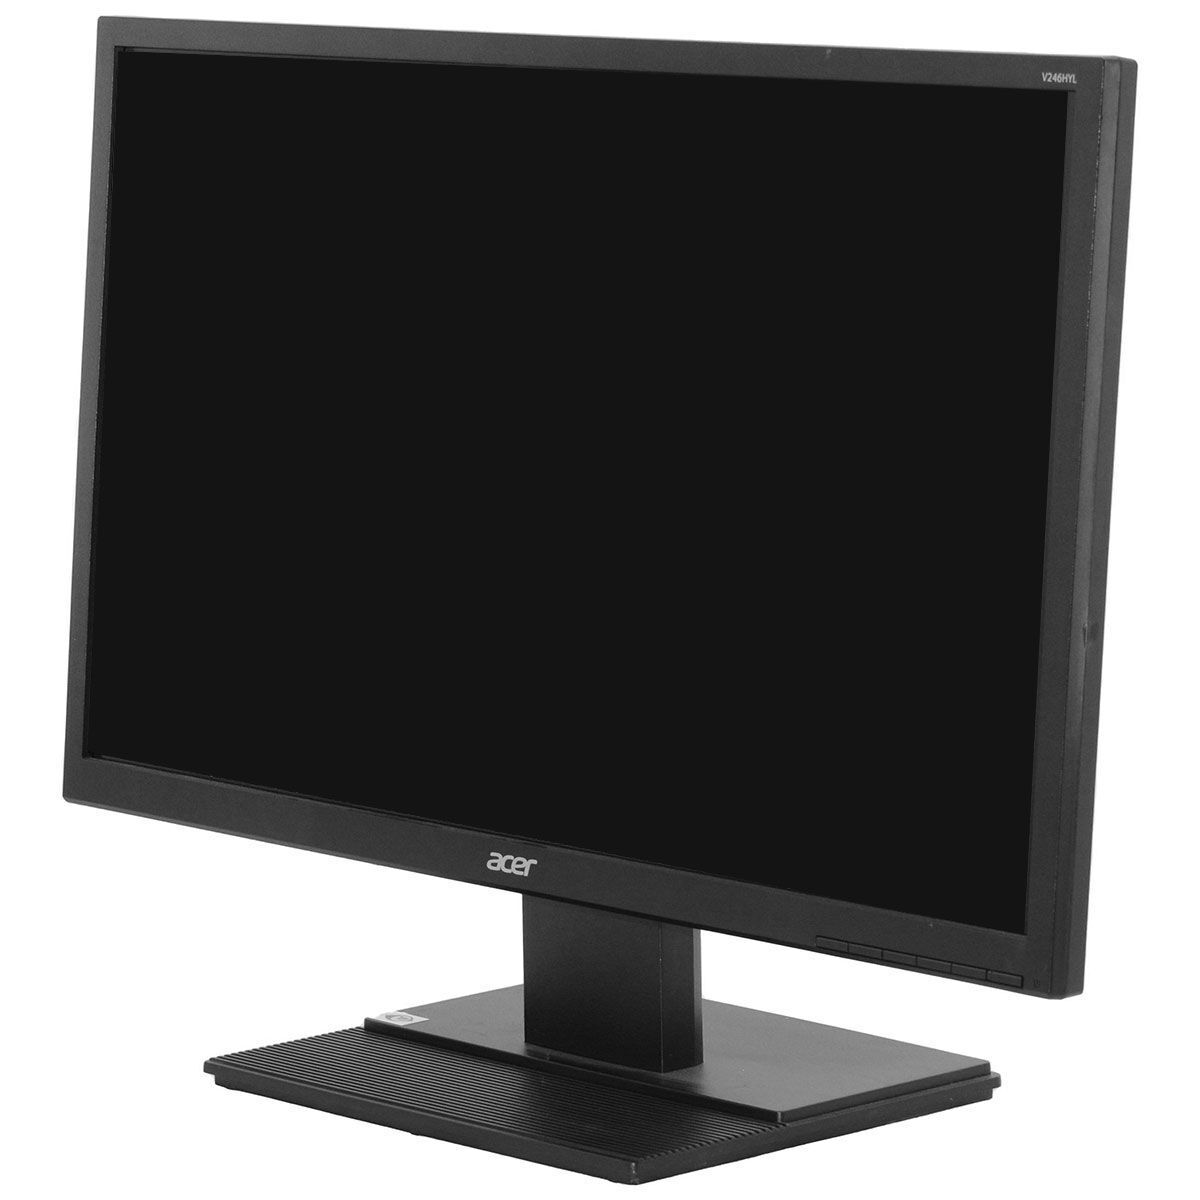 Acer V246HYL (23.8-in) V6 LED Backlit Full HD LCD Monitor (1920 x 1080) - Black